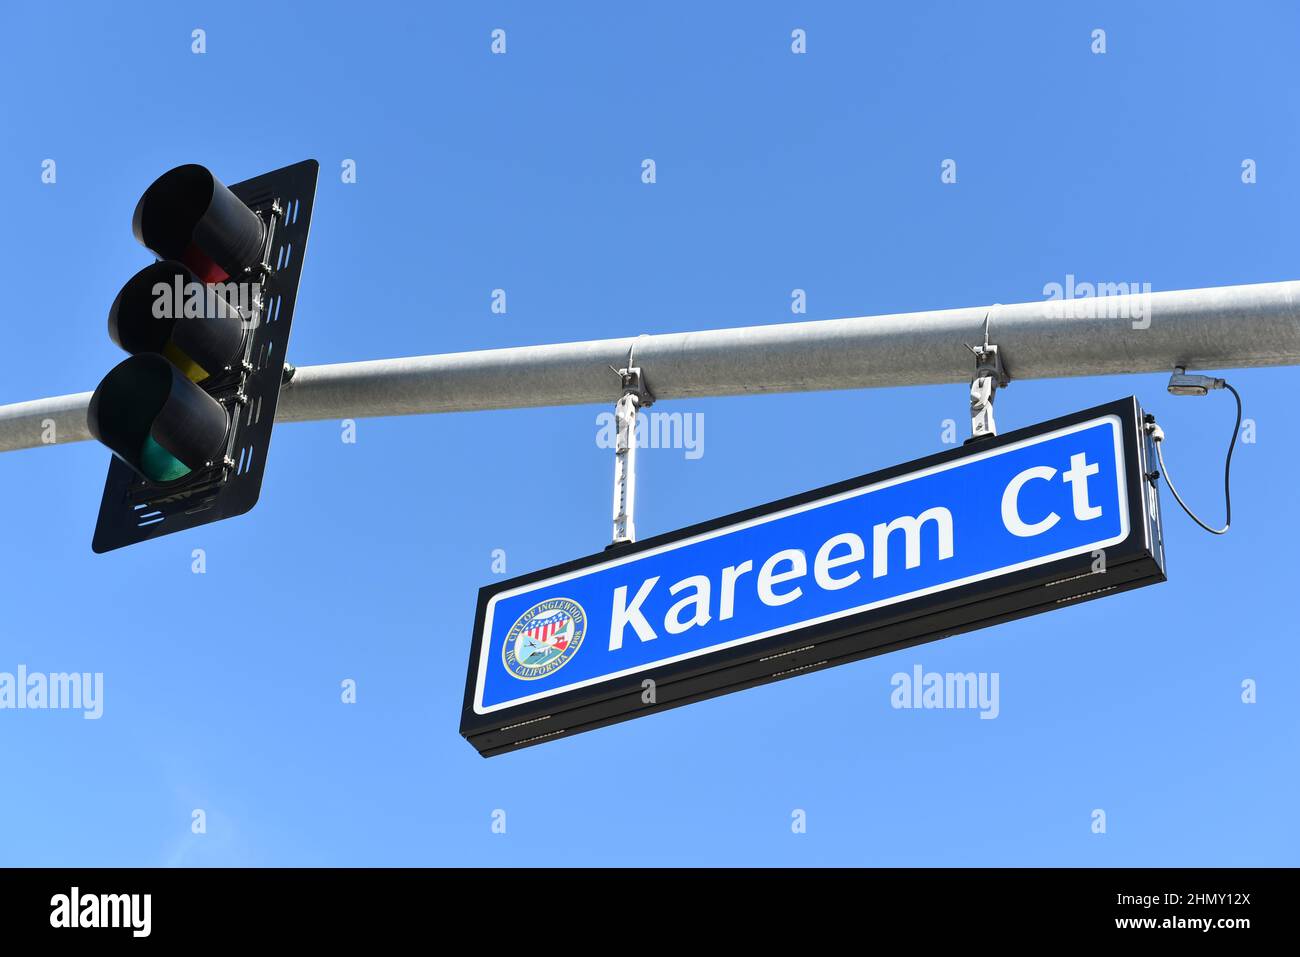 INGLEWOOD, CALIFORNIA - 12 FEB 2022: Kareem Court Drive segnaletica stradale all'incrocio di Pincay Drive al Forum, onorando Kareem Abdul-Jabbar Foto Stock